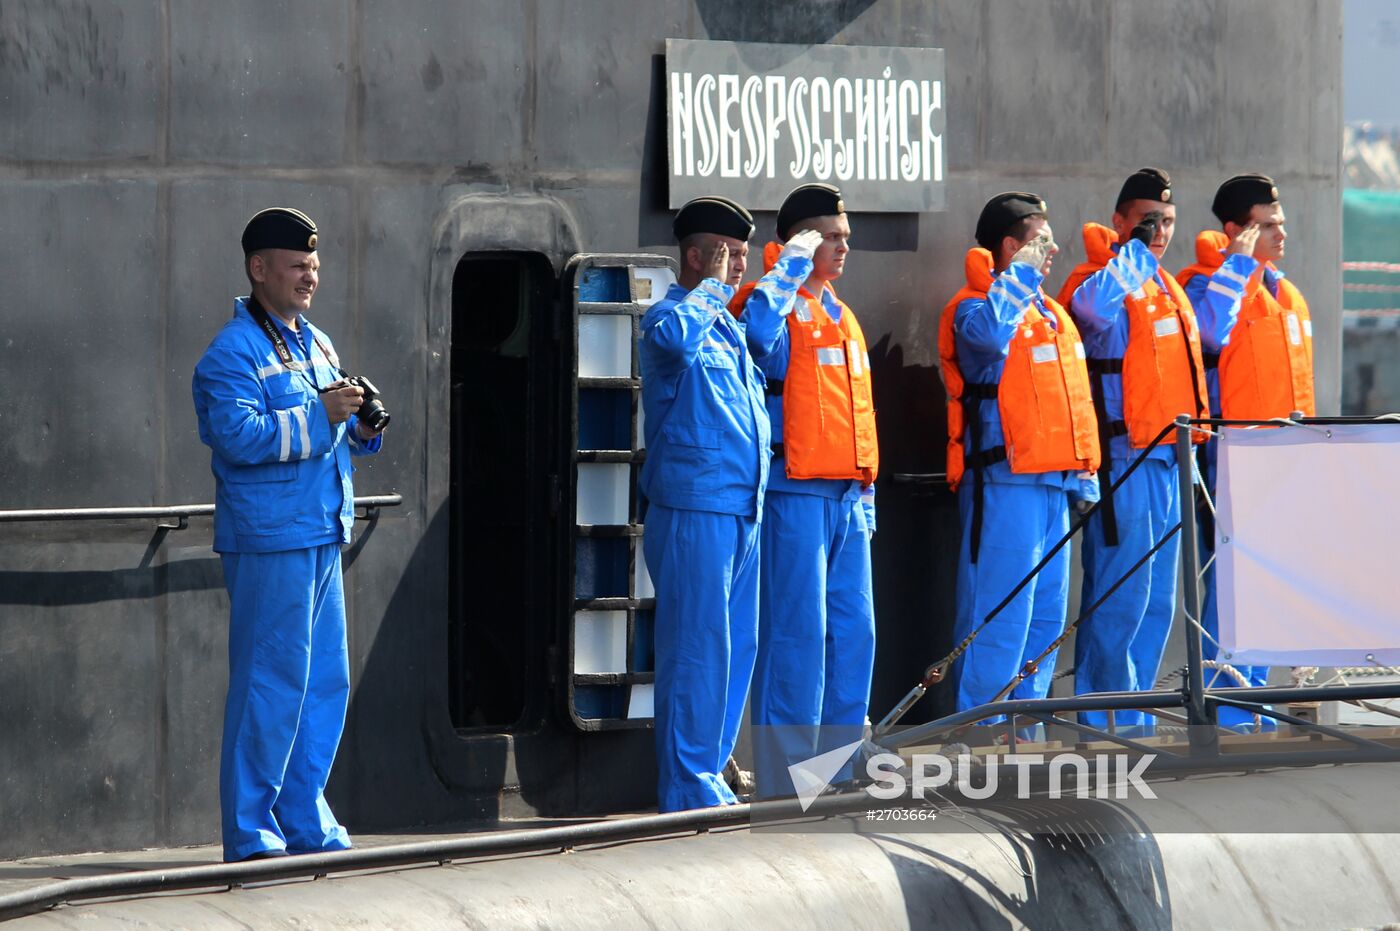 Submarine "Novorossiysk" arrives at her basic site